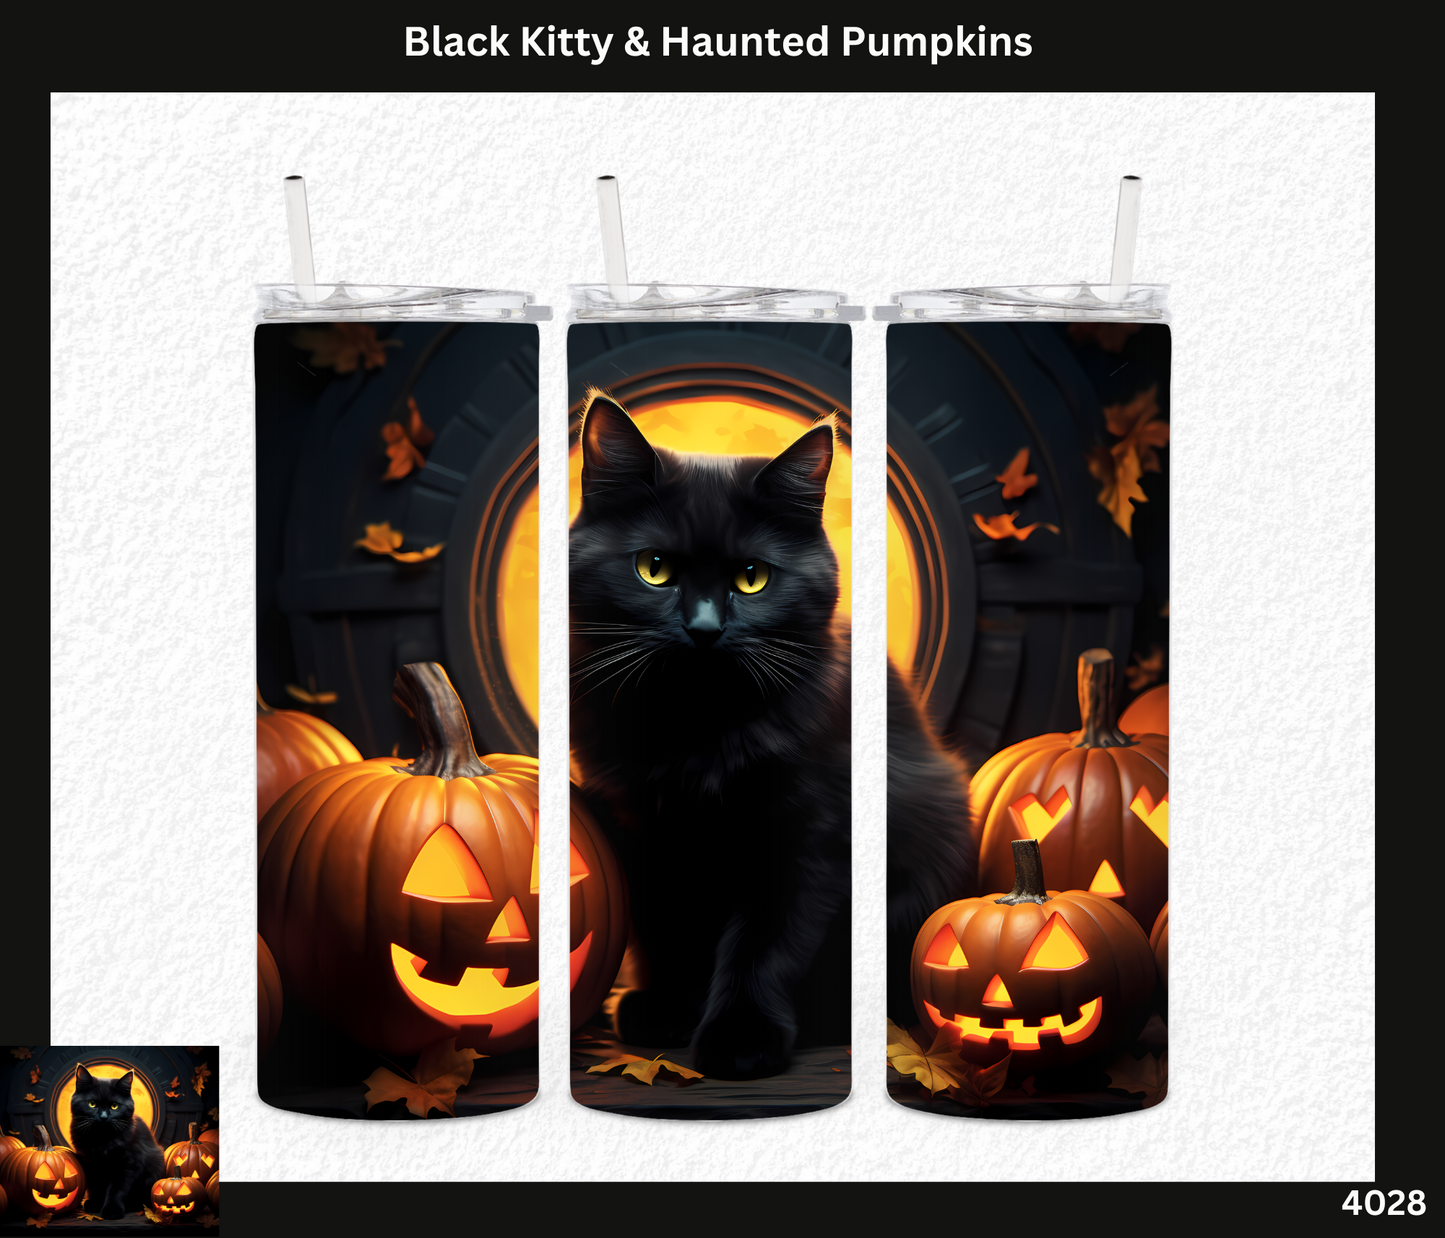 Black Kitty & Haunted Pumpkins